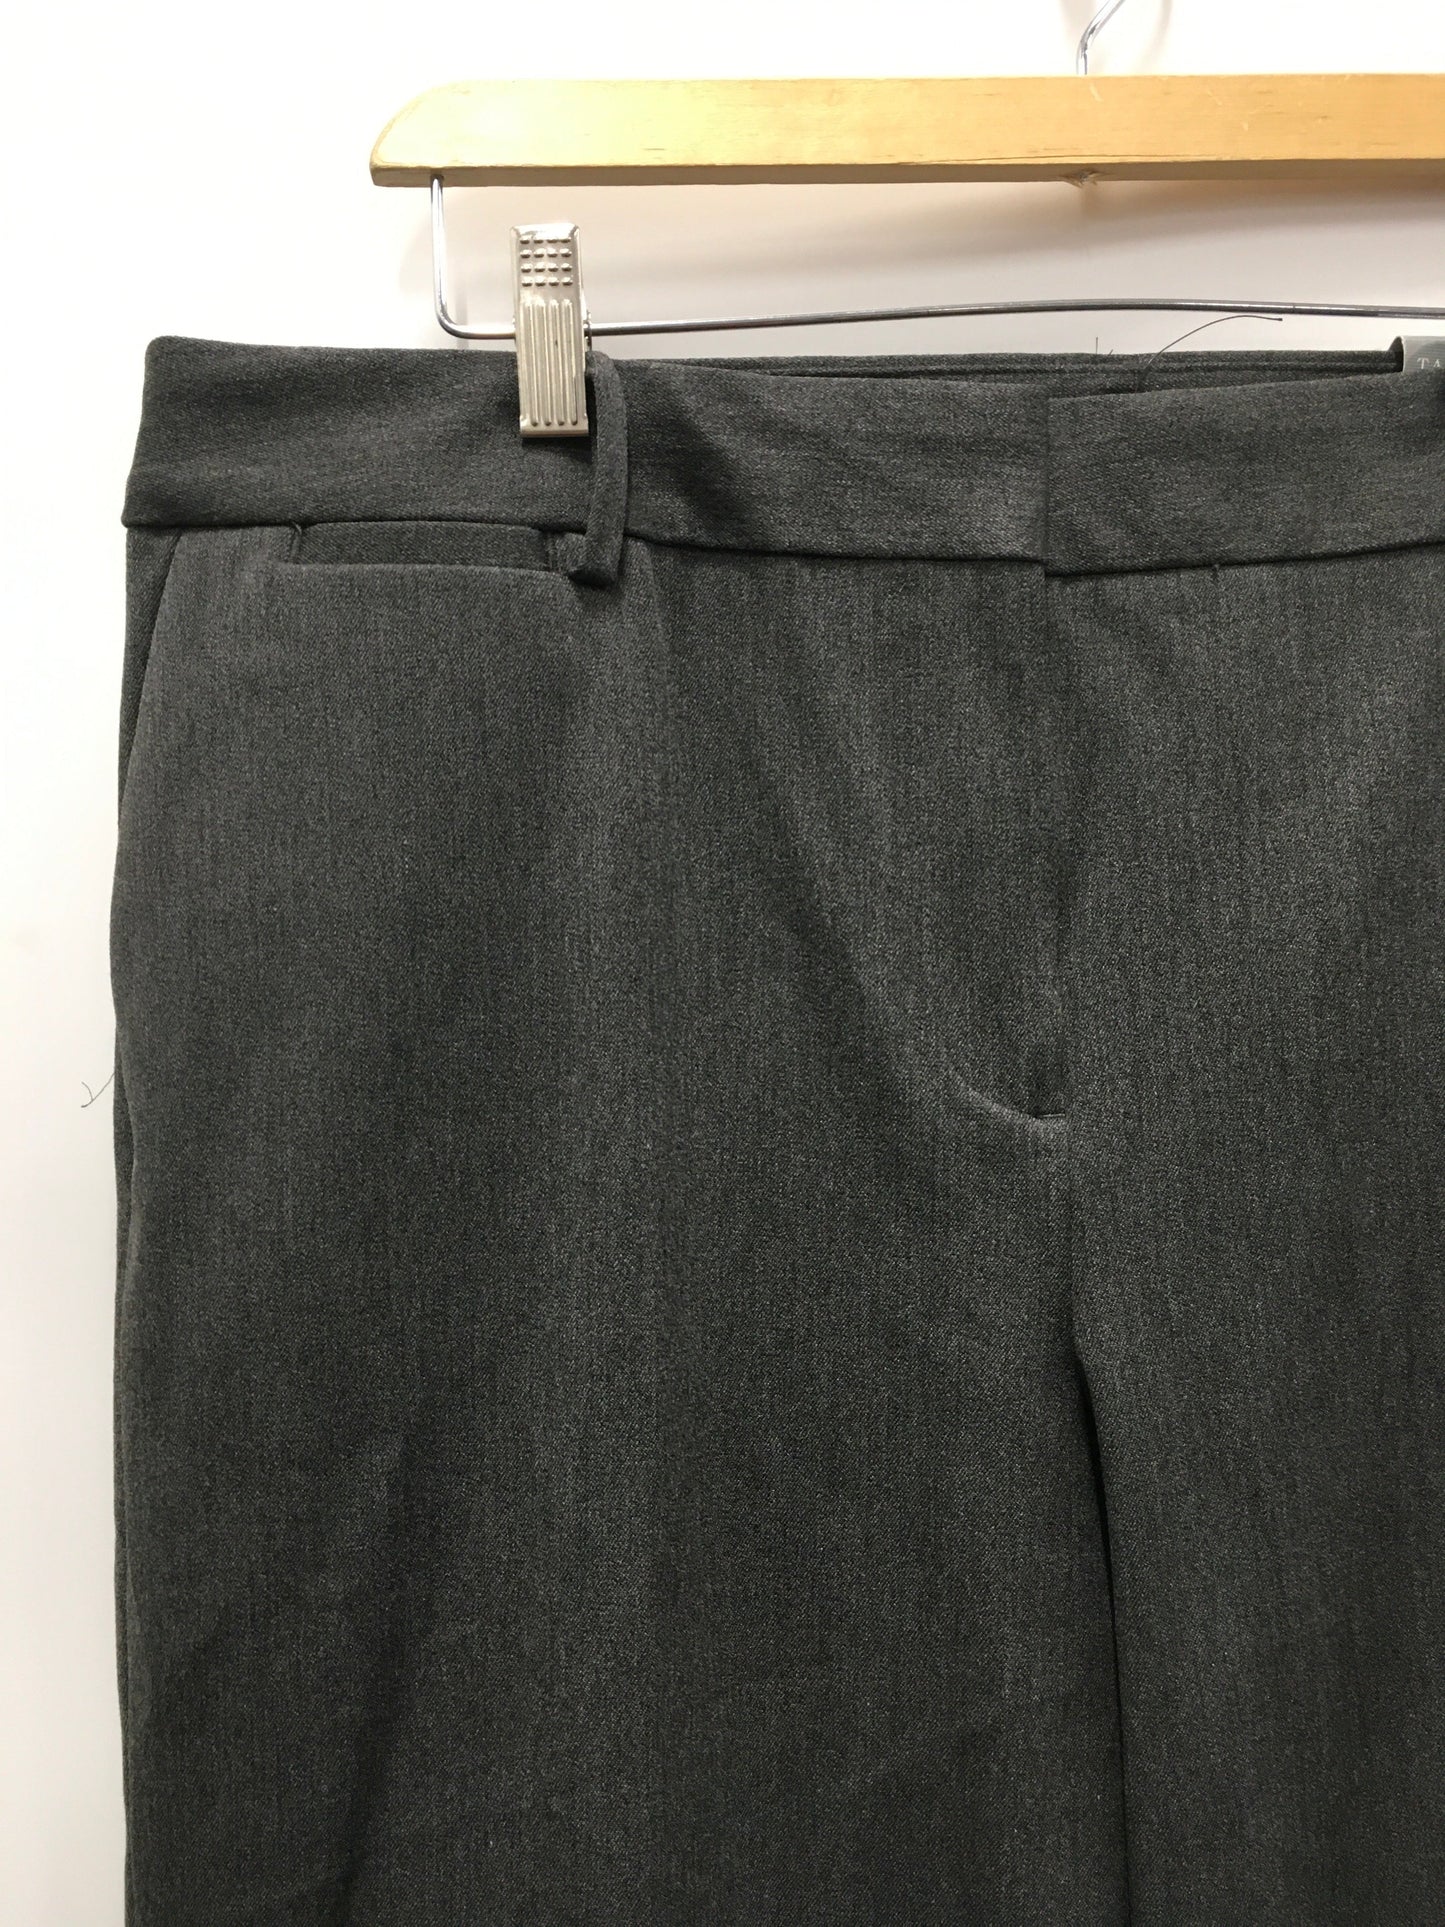 Grey Pants Dress Talbots, Size 16